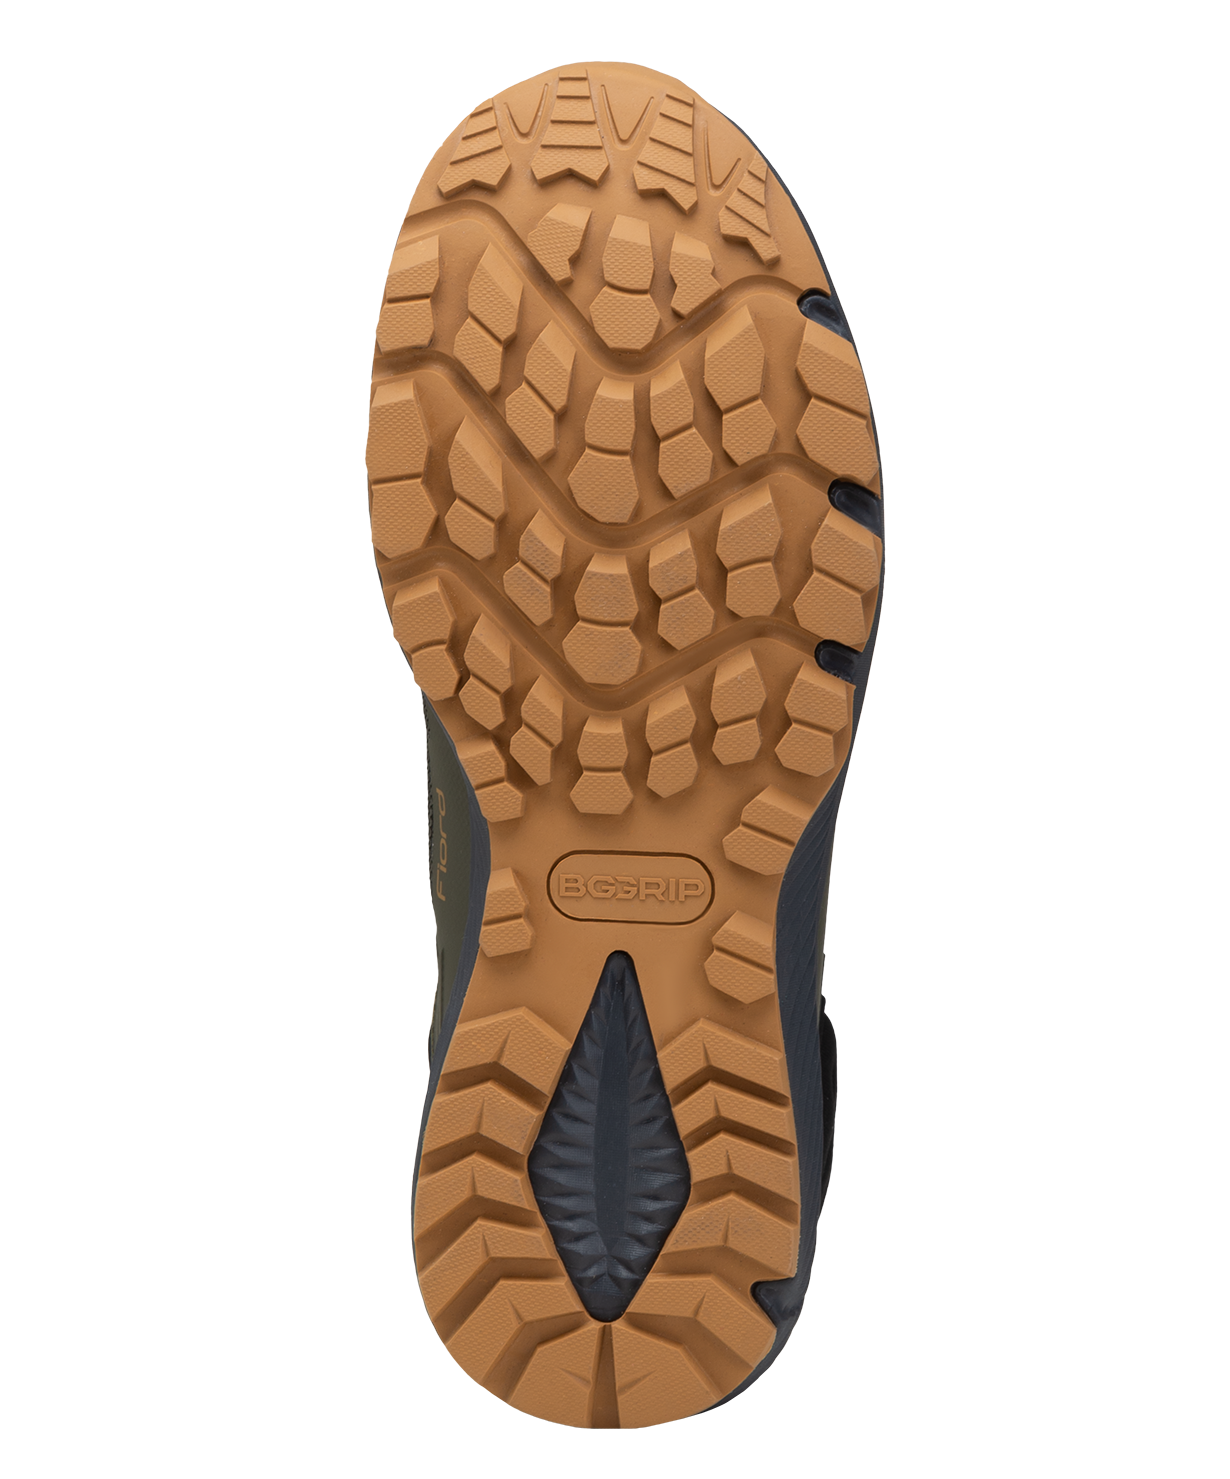 Ботинки Berger Fiord Waterproof, хаки/черный, мужской, р. 39-45 размер 40